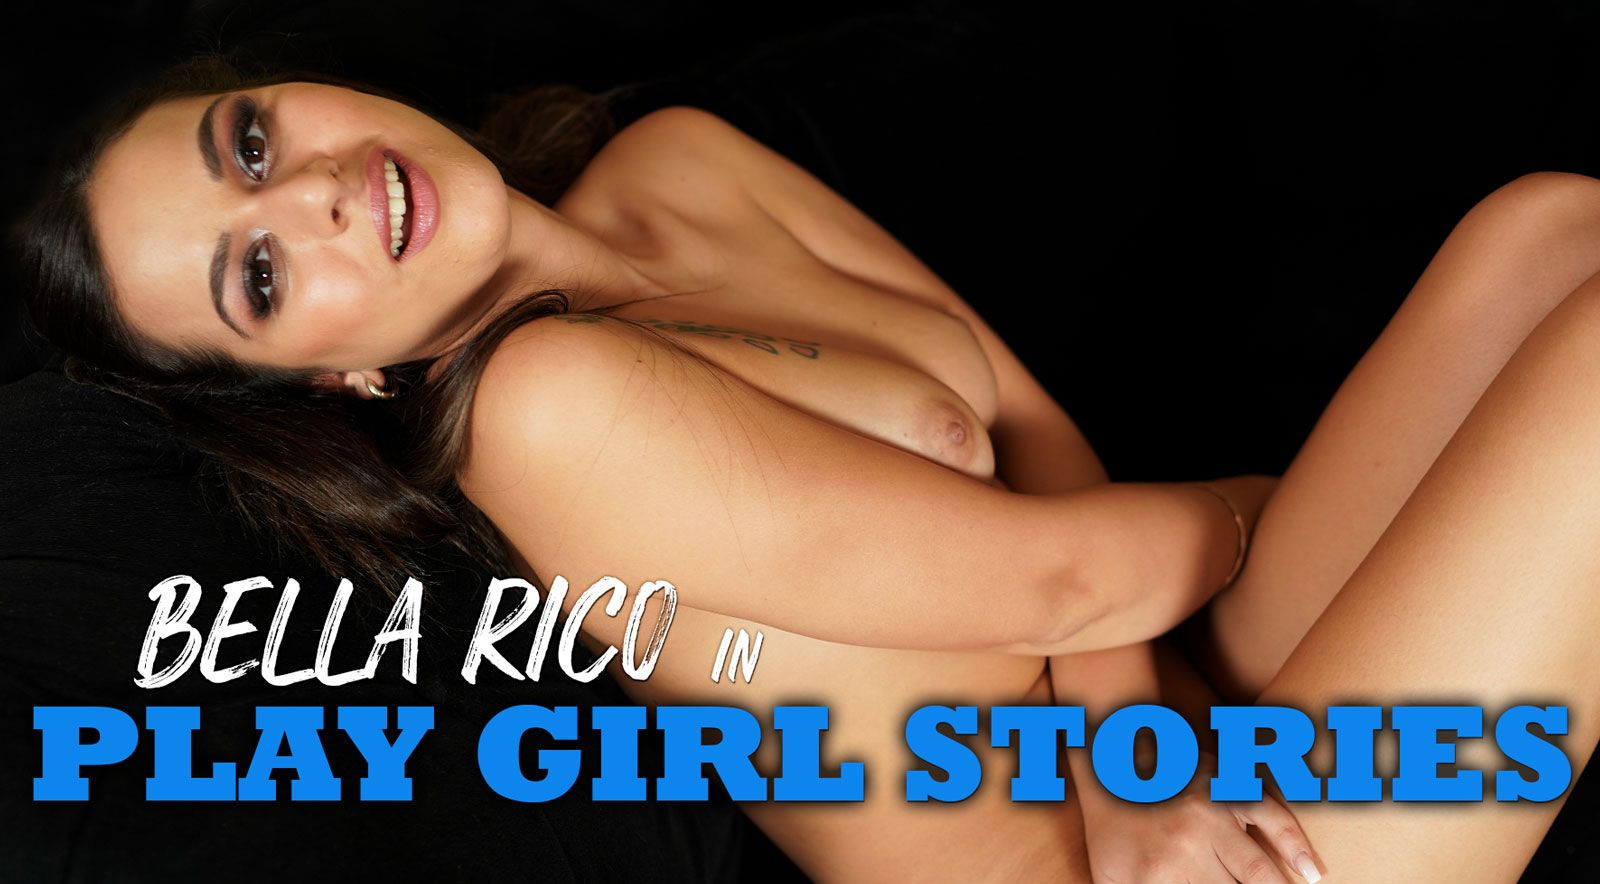 Play Girl Stories with Bella Rico: Bella Rico Slideshow